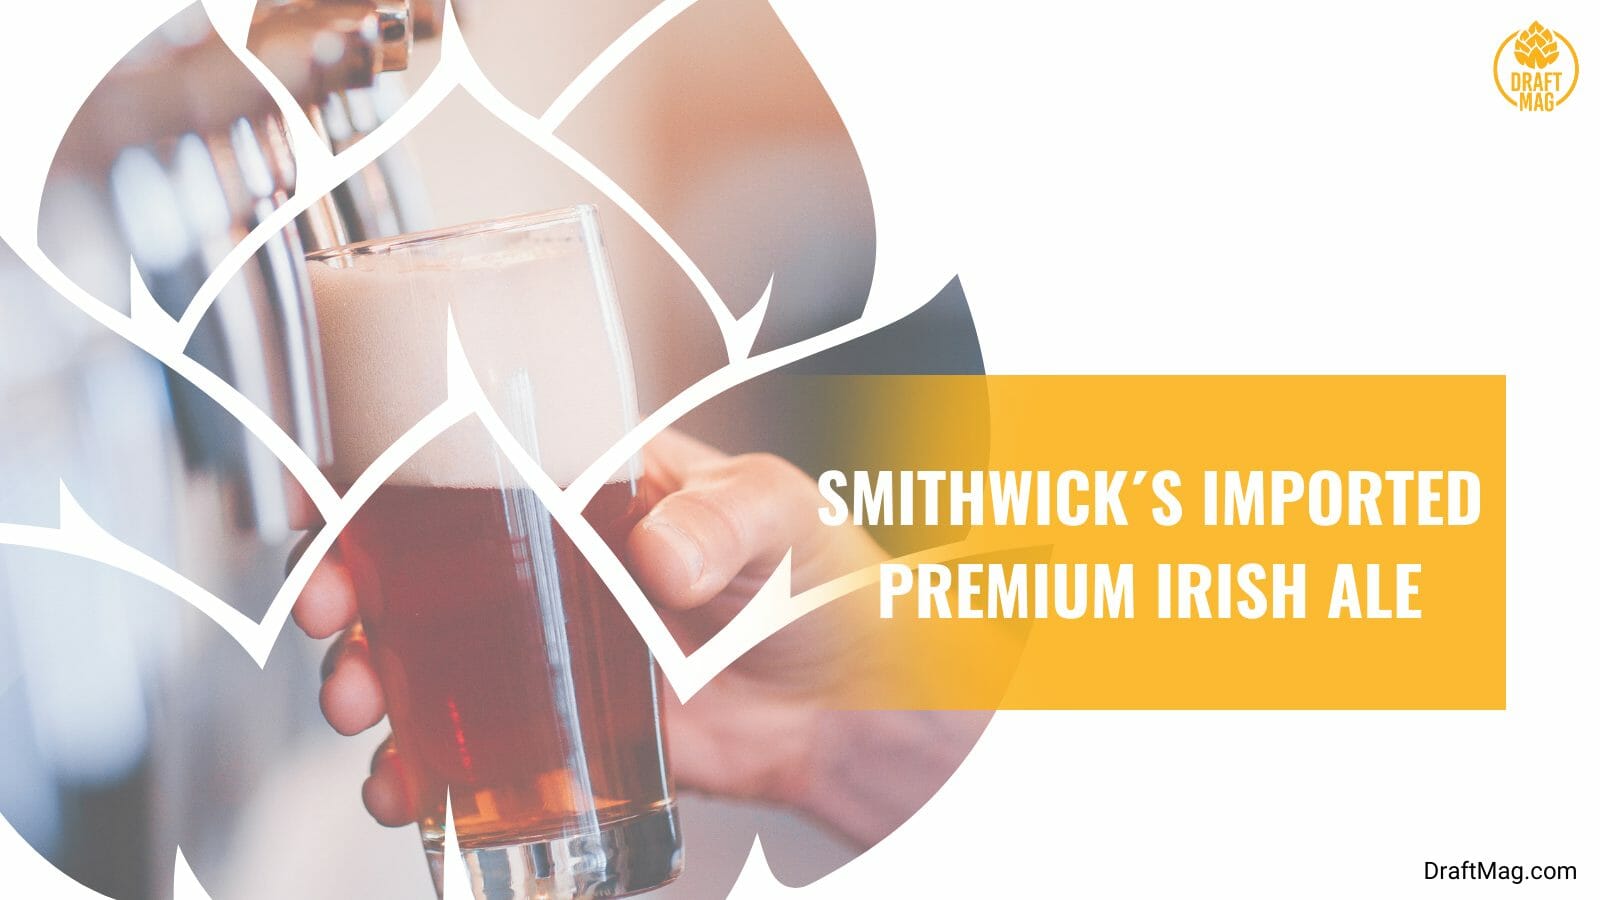 Smithwick imported premium irish ale